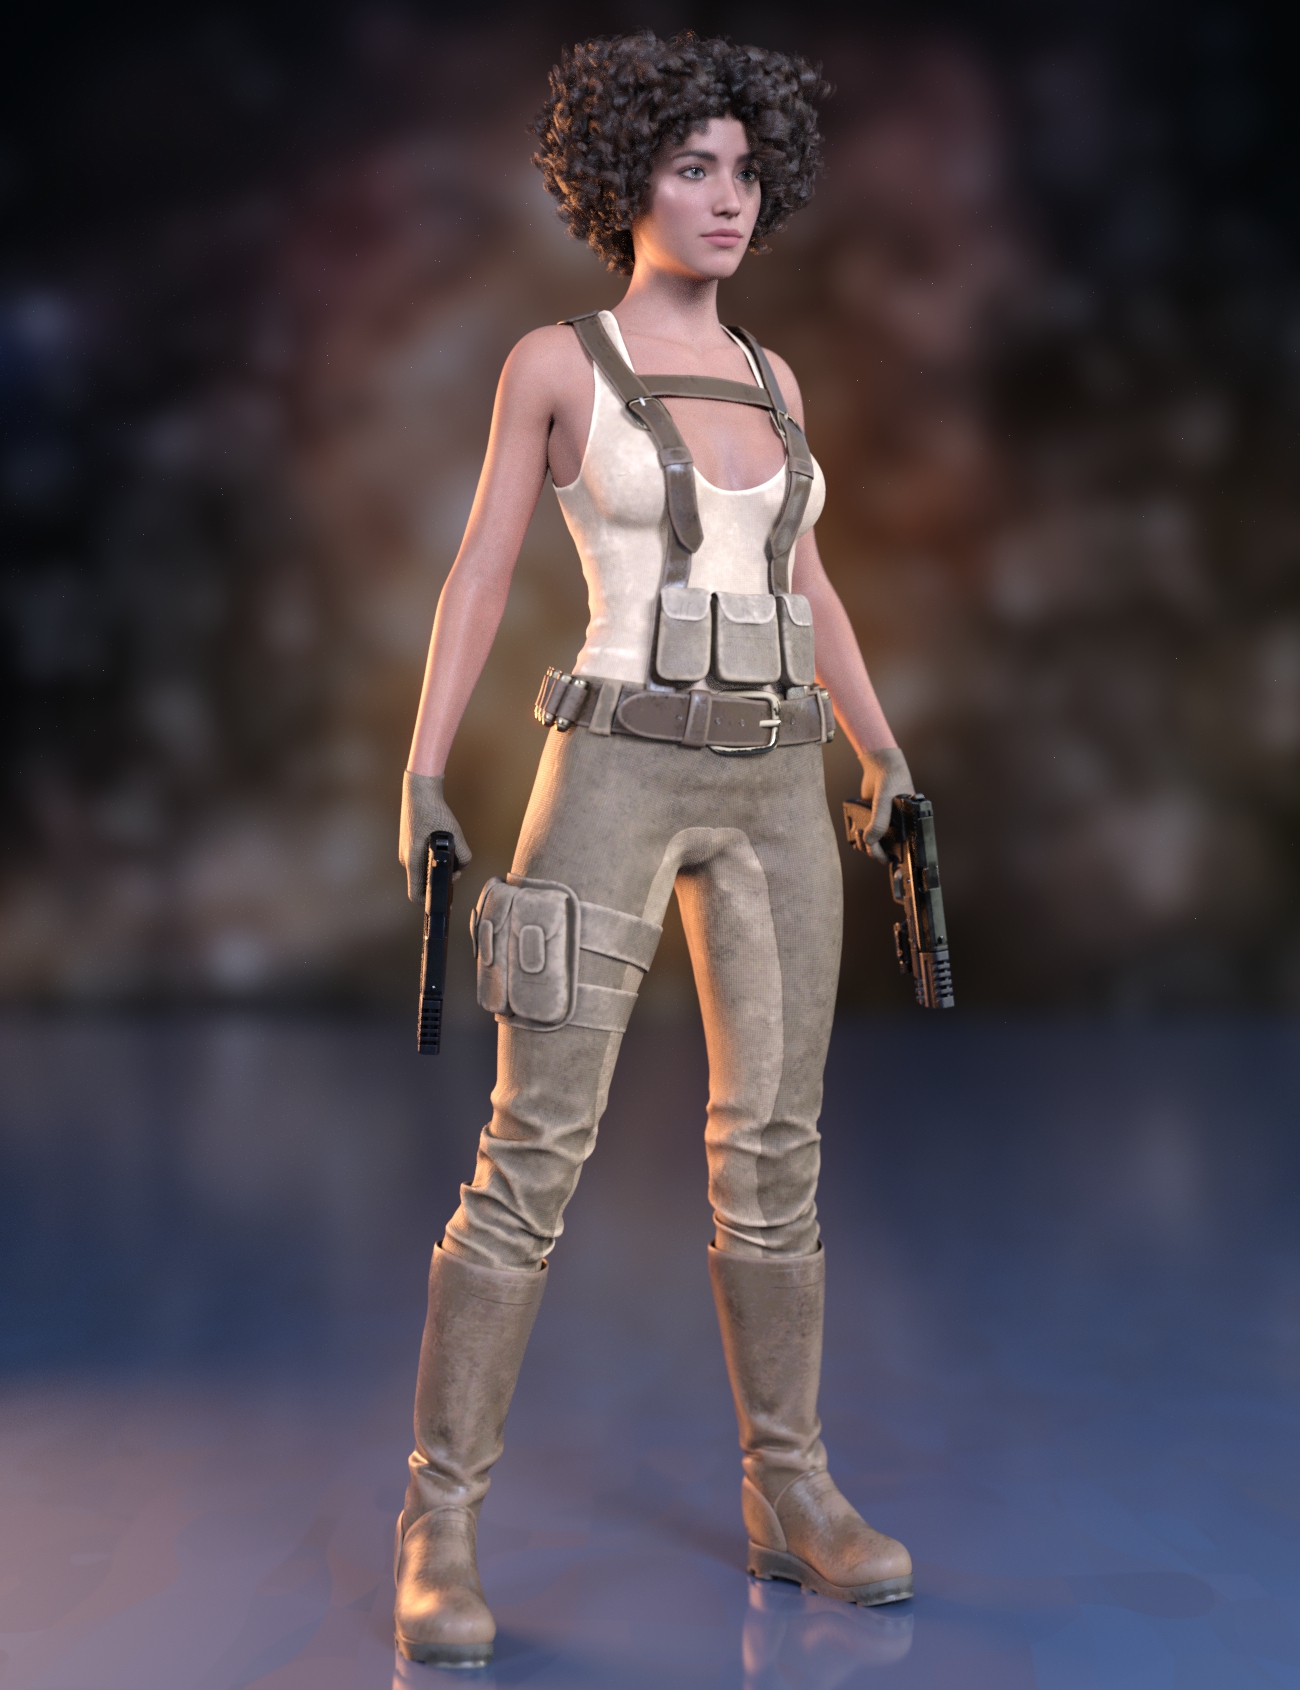 Rebel Militia Outfit for Genesis 8.1 Females by: Yura, 3D Models by Daz 3D